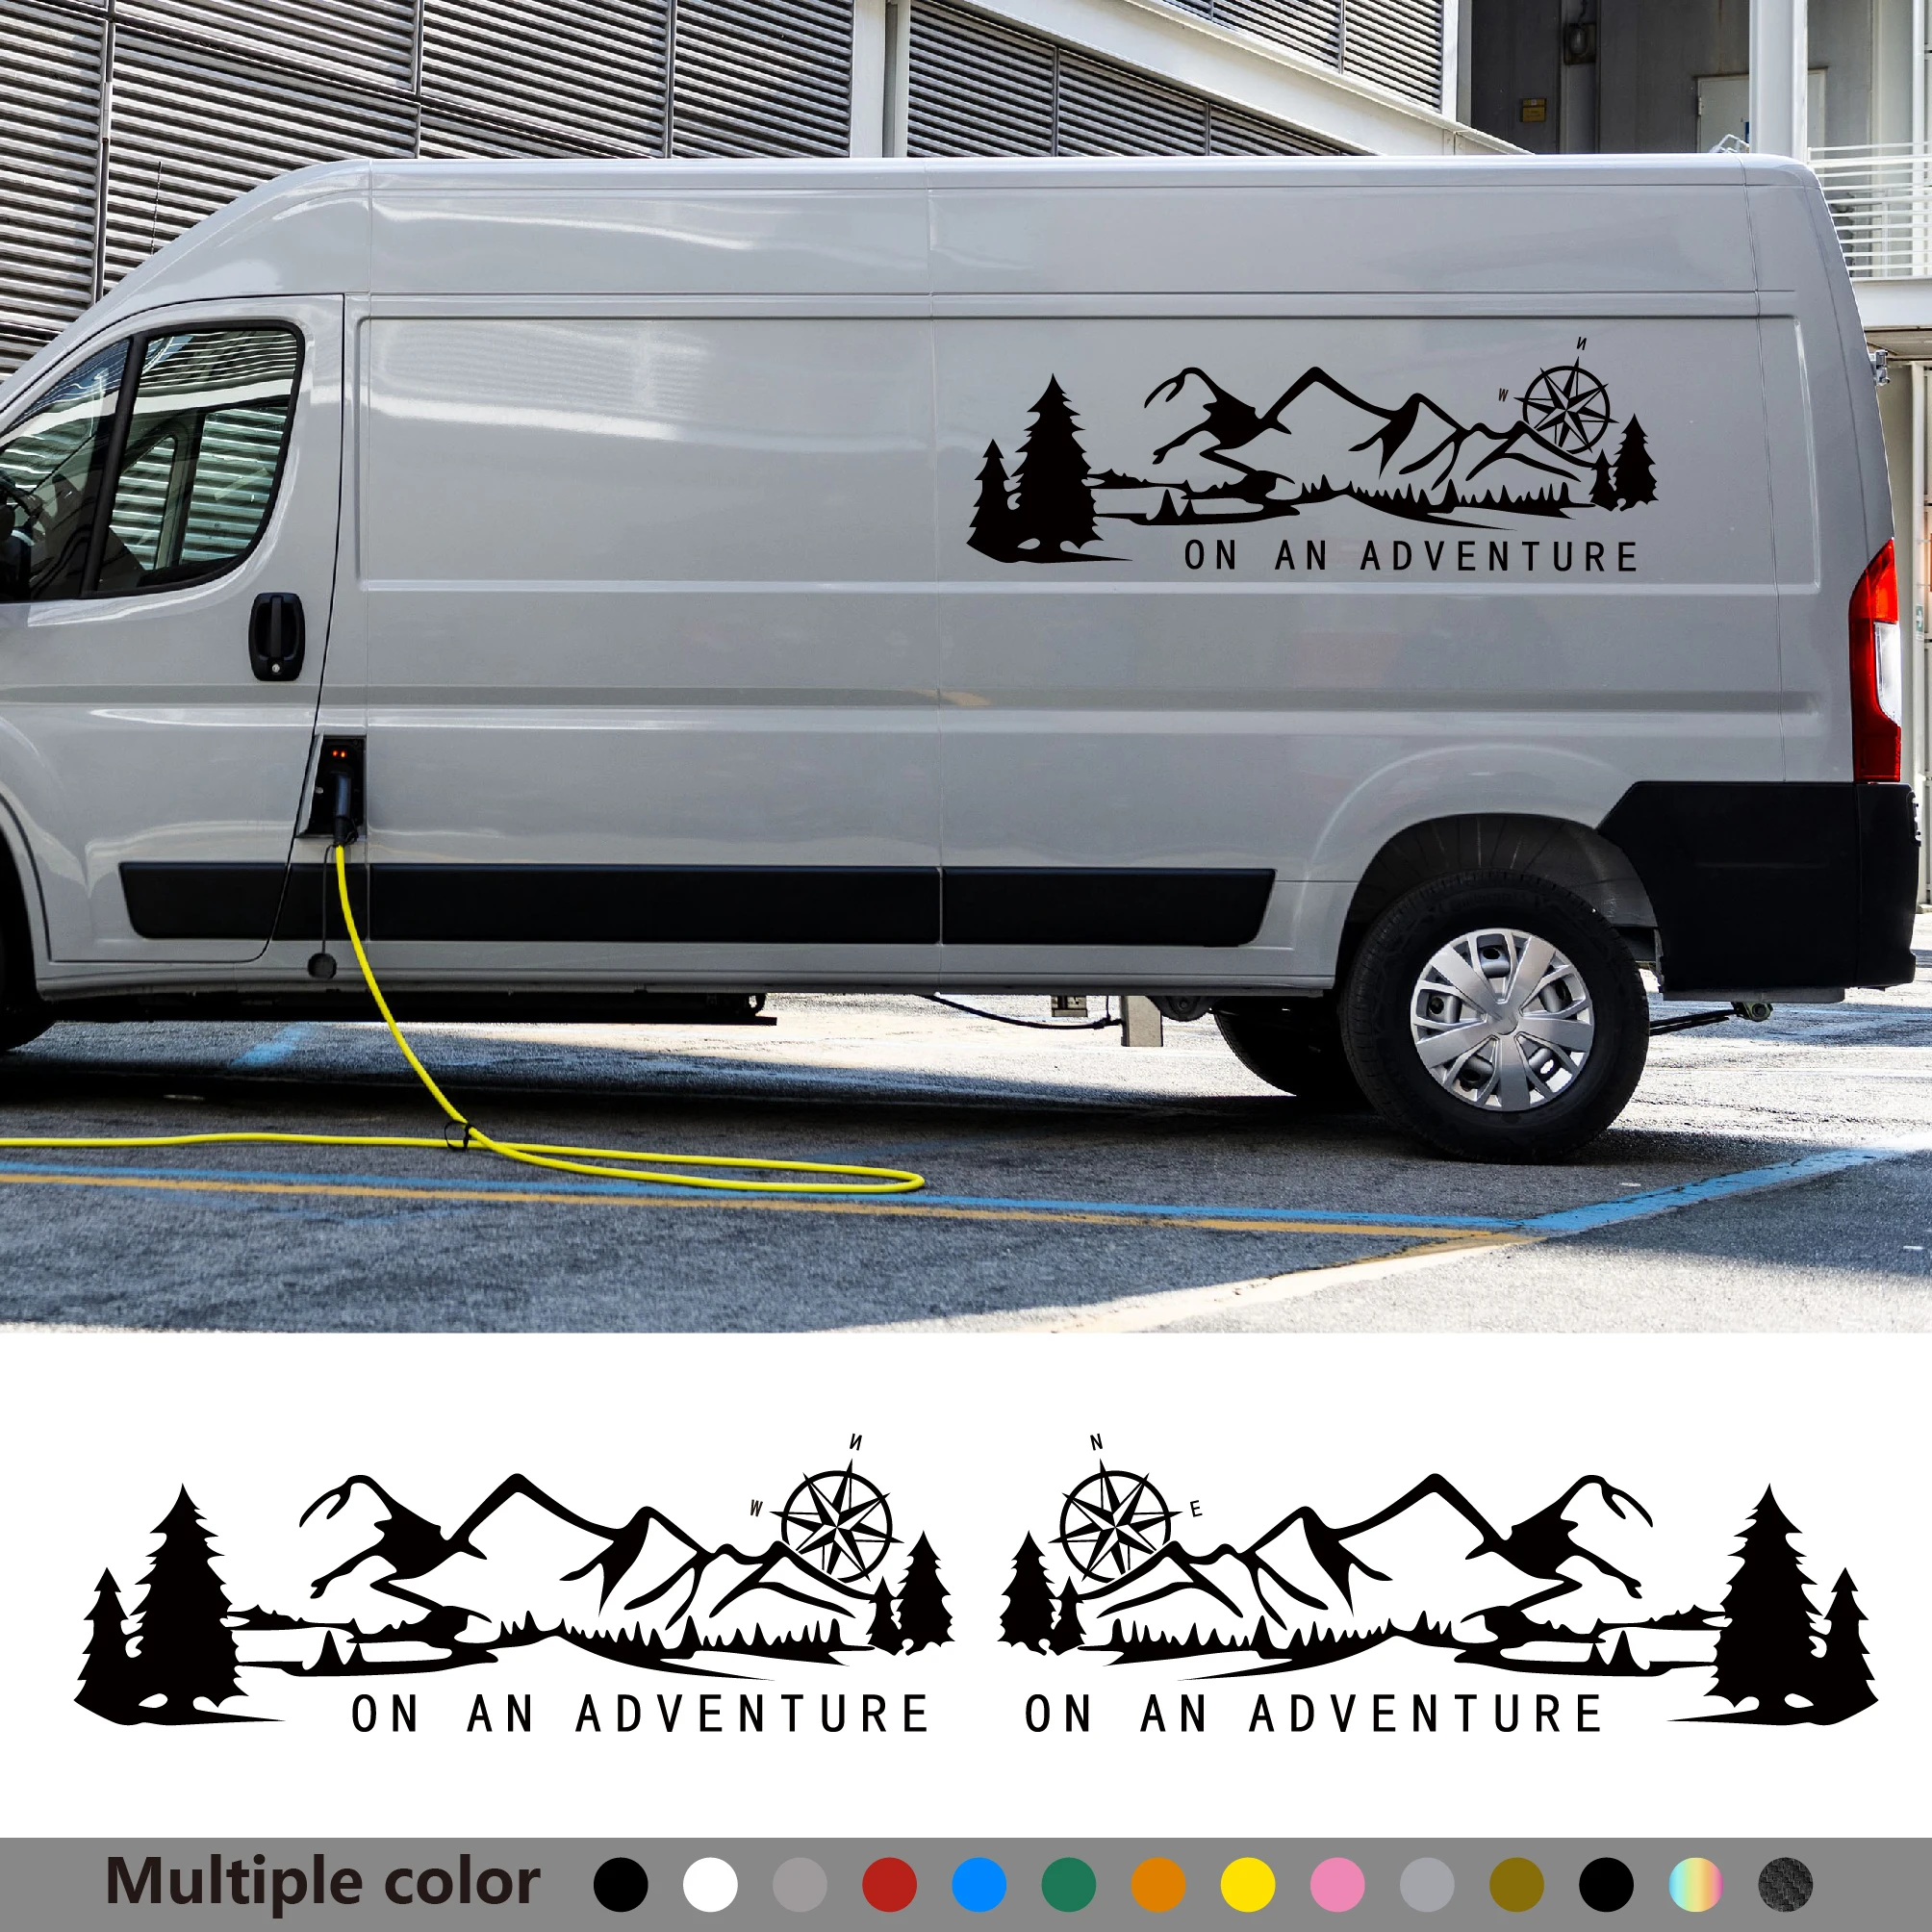 

2pcs Compass Mountain Camper Rv Van Truck Car Sticker Decal For Caravan Motorhome Travel Auto Decoration Vinyl Film Cover